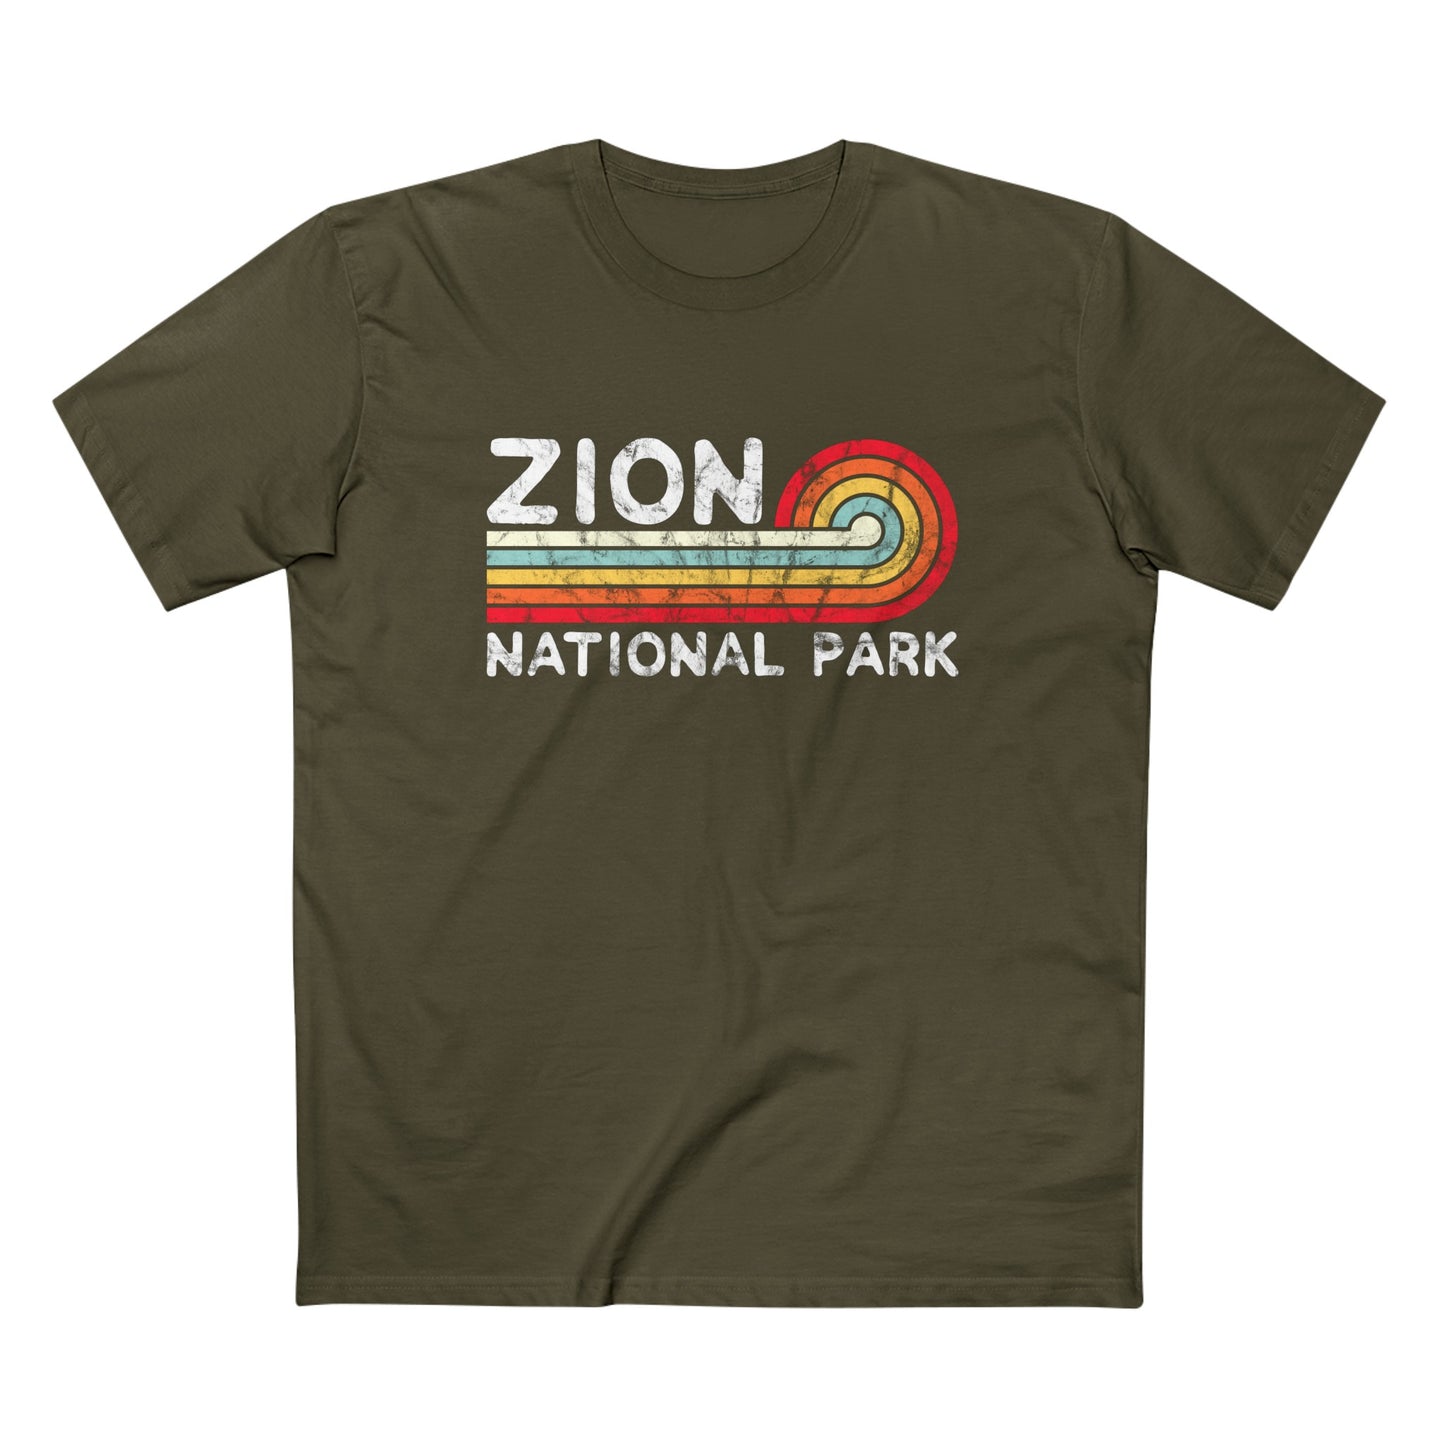 Zion National Park T-Shirt - Vintage Stretched Sunrise